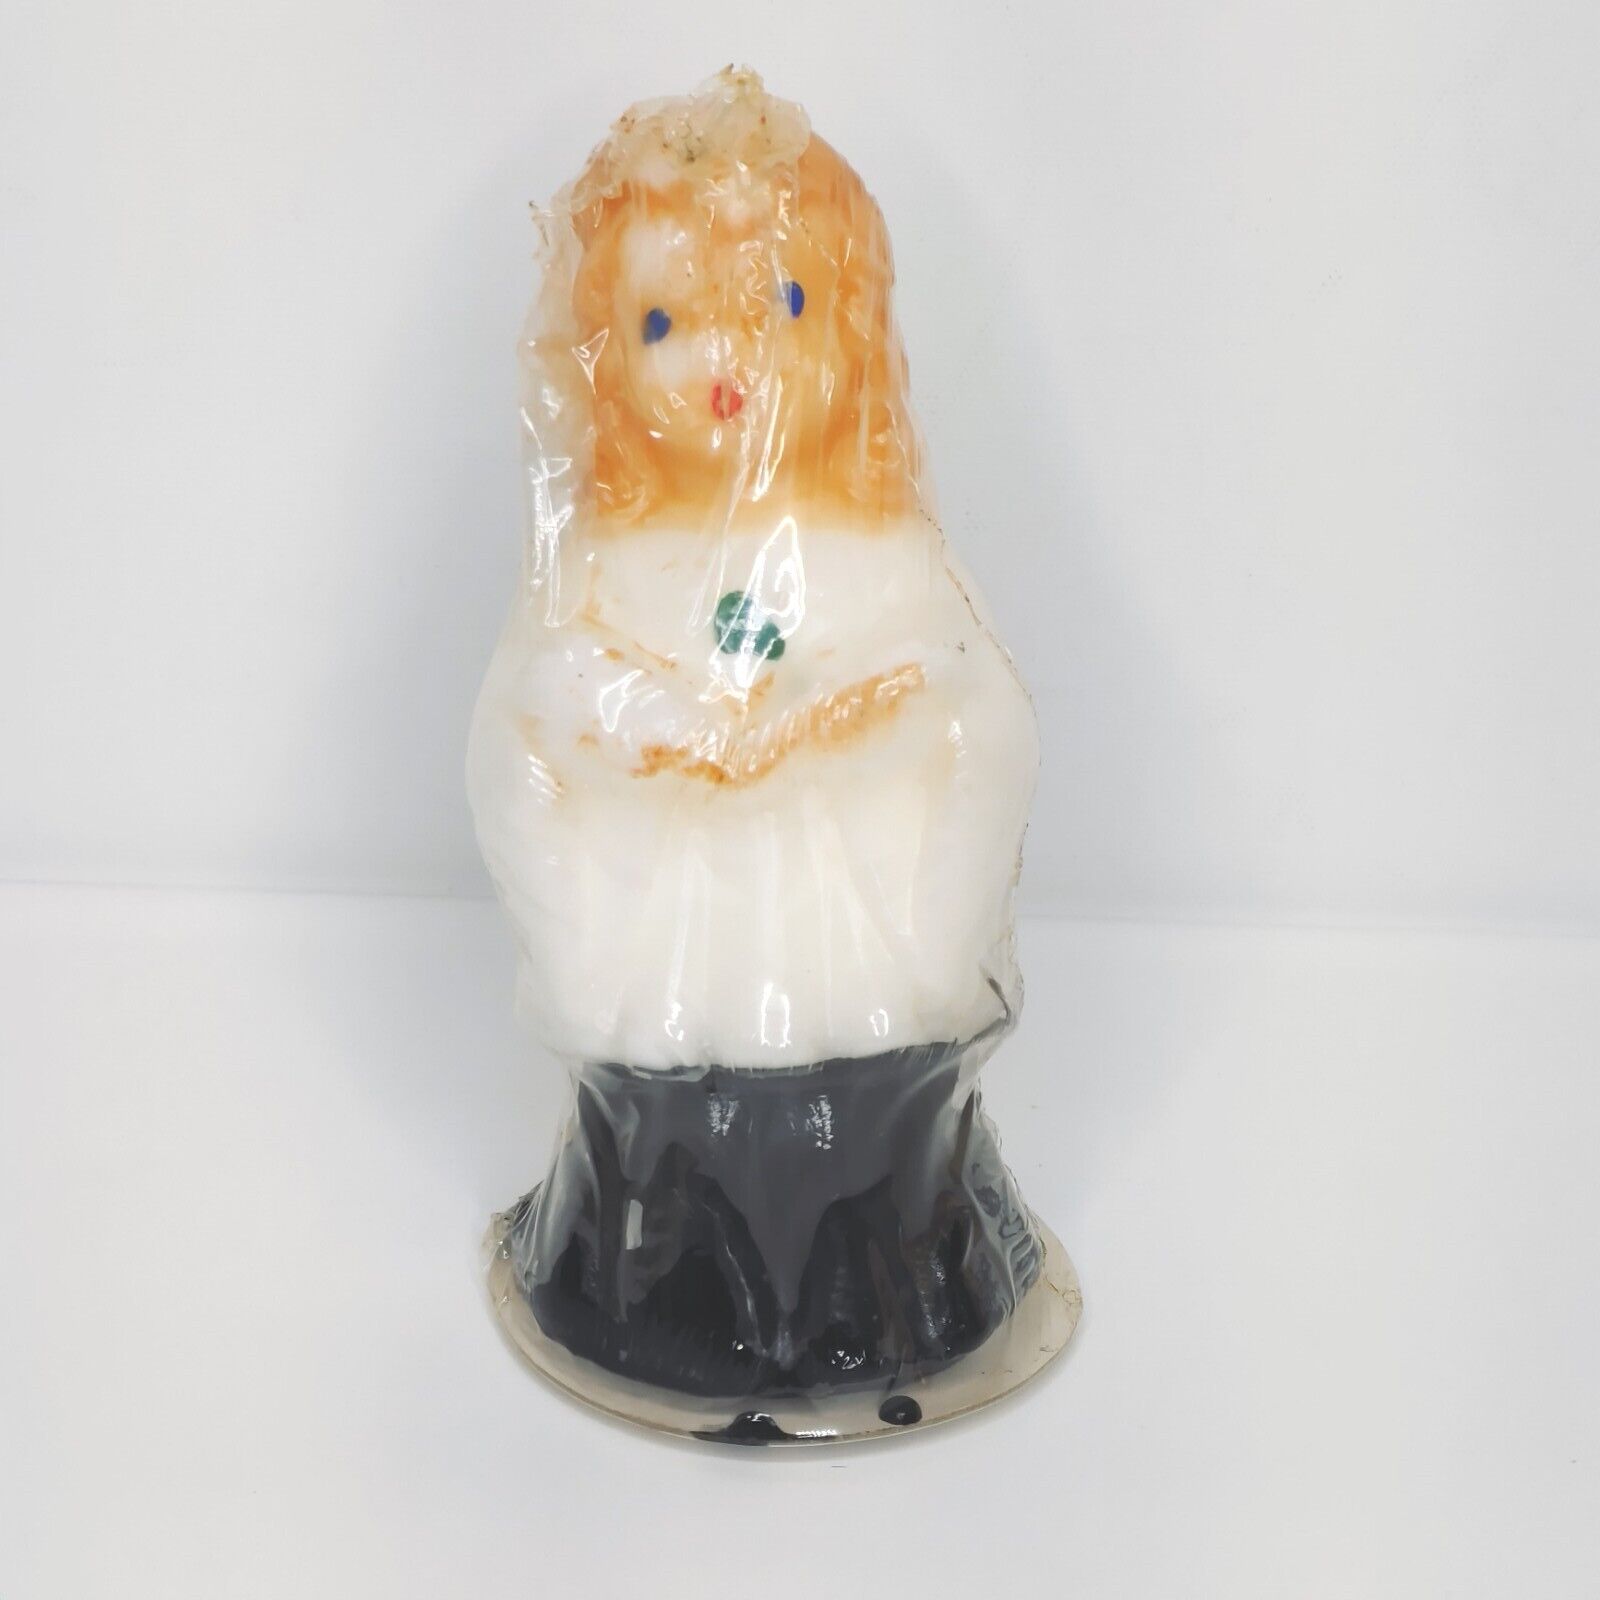 Vintage Gurley Choir Girl Candle Sealed In Original Packaging (Damaged) 5\